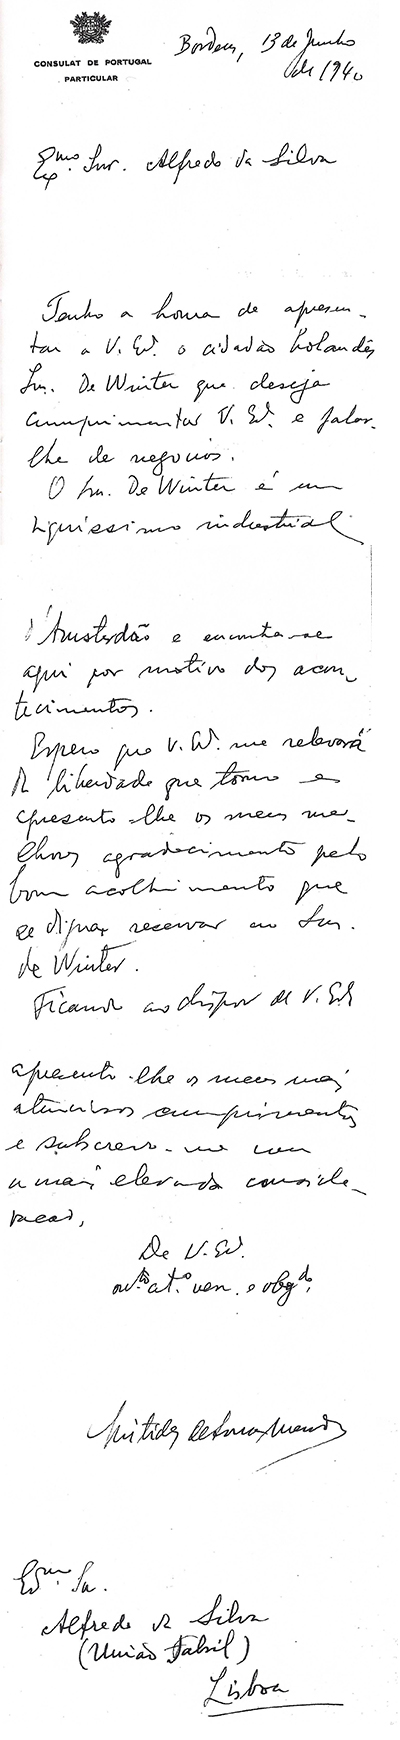 Letter from Sousa Mendes on behalf of DE WINTER